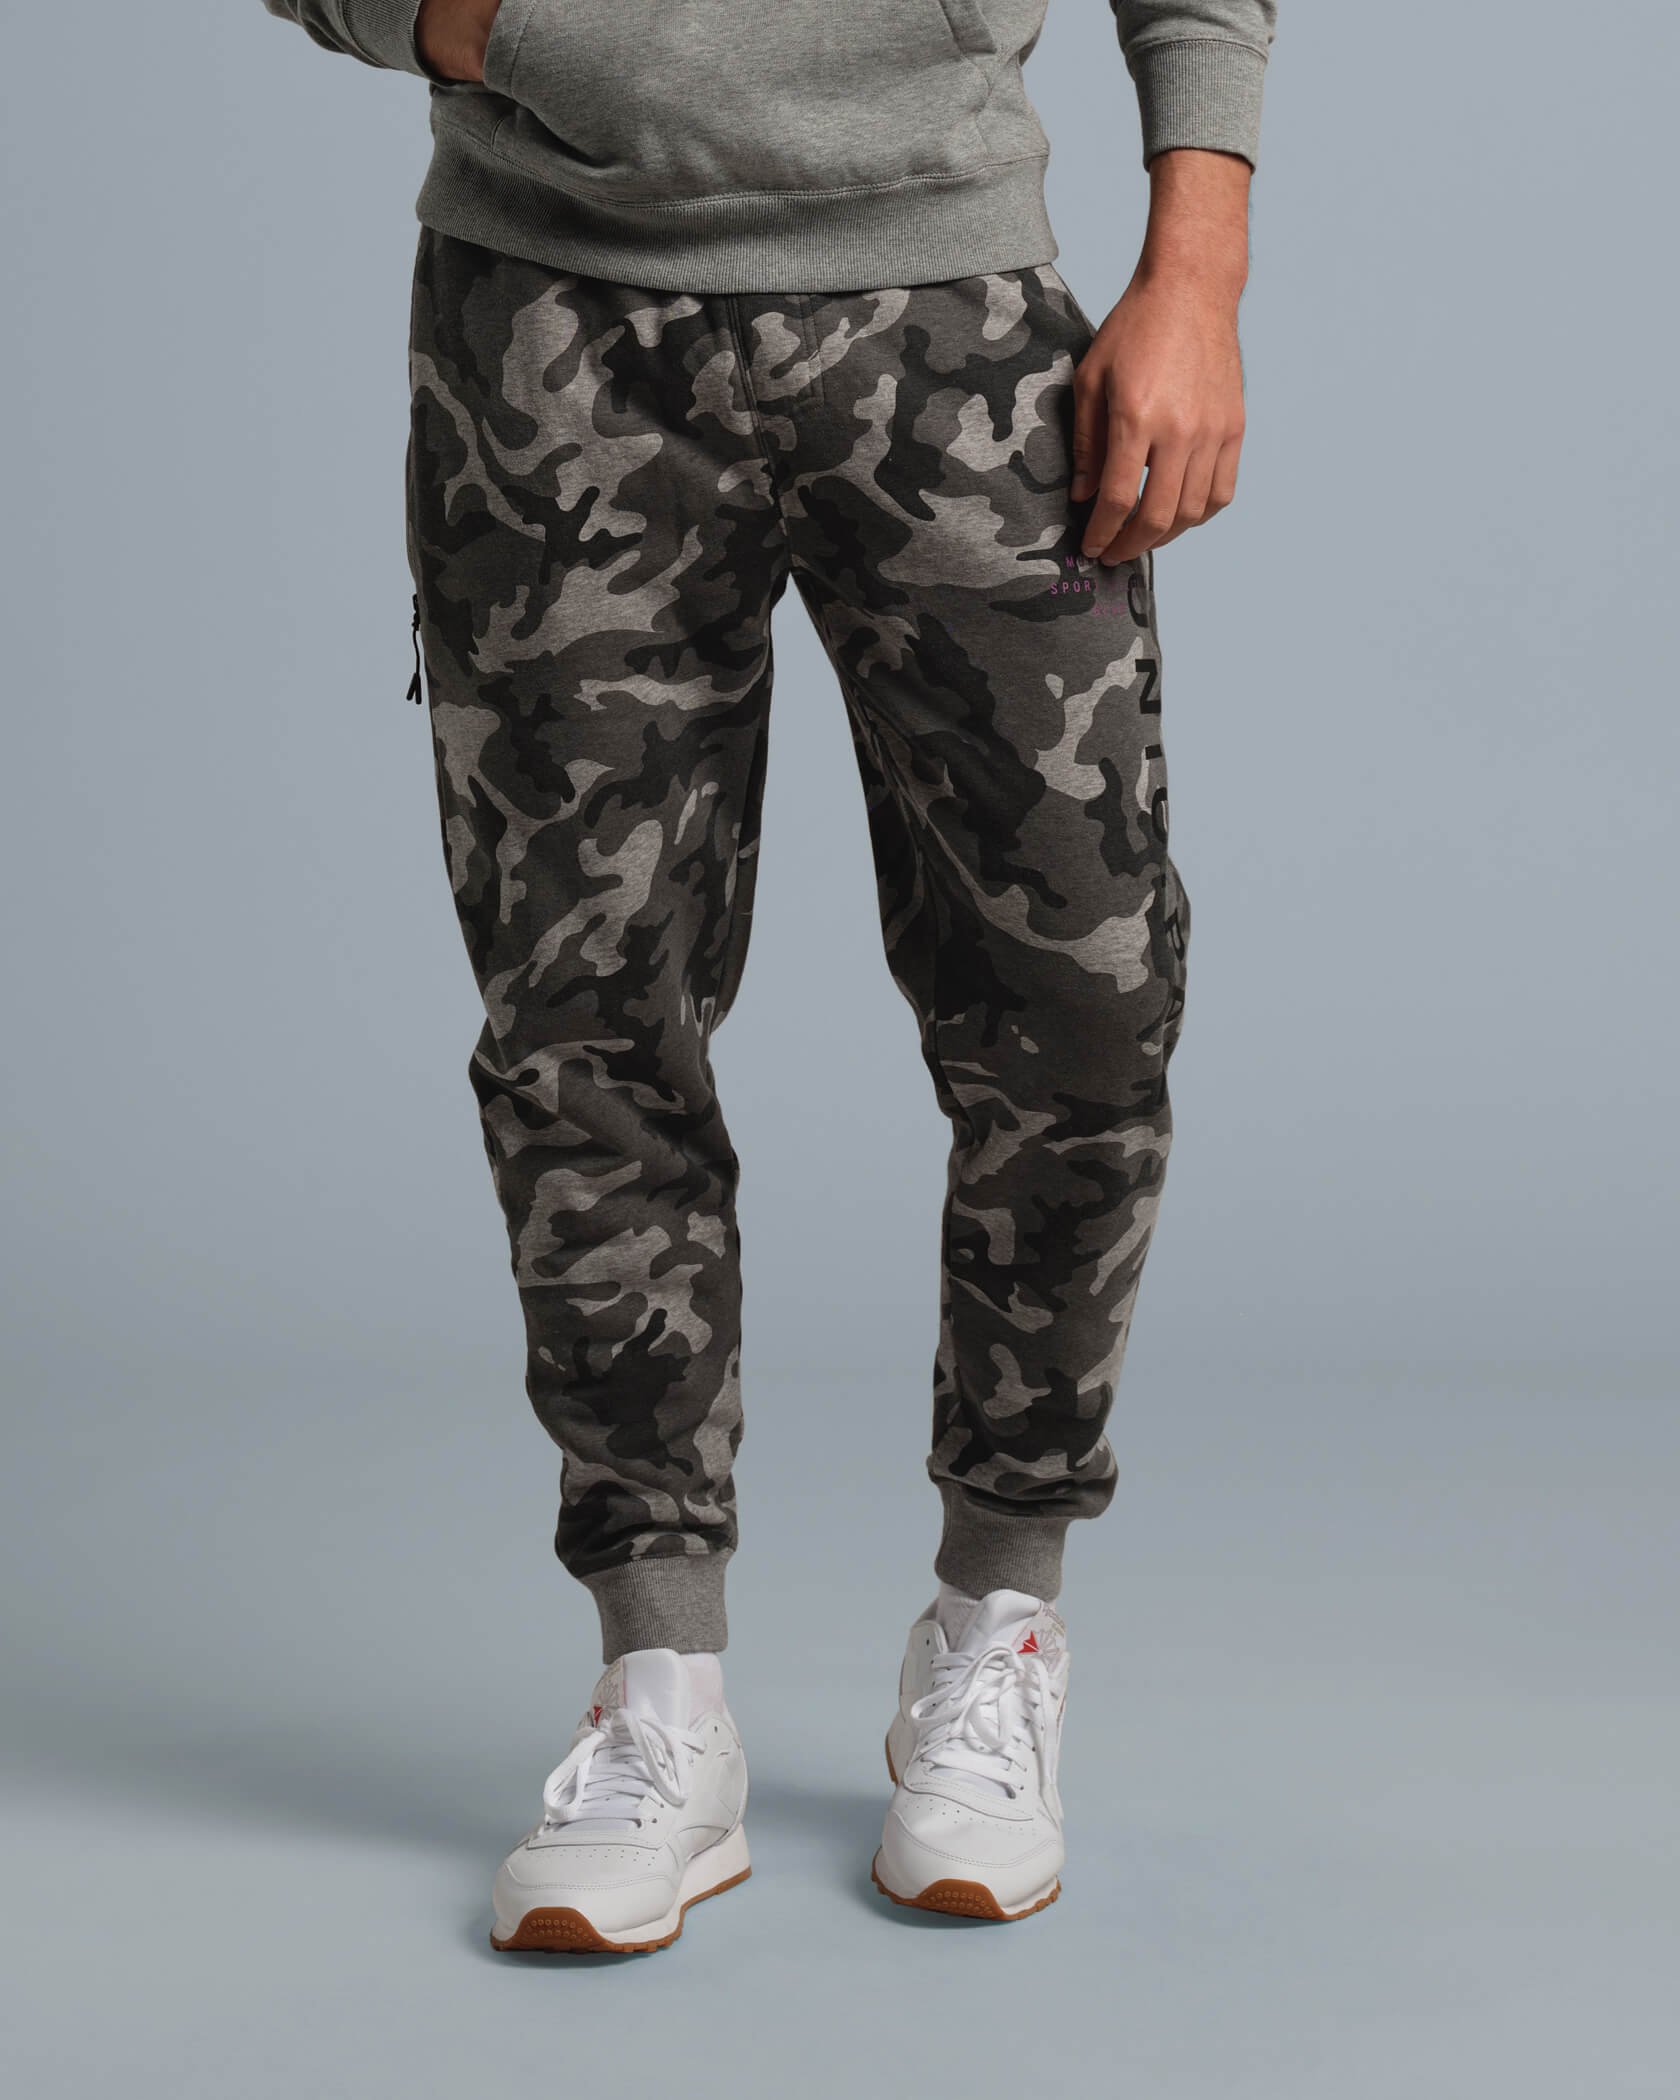 Rothco BDU Gray City Camo Cargo Pants Uniform Military Fatigues XL NEW   eBay